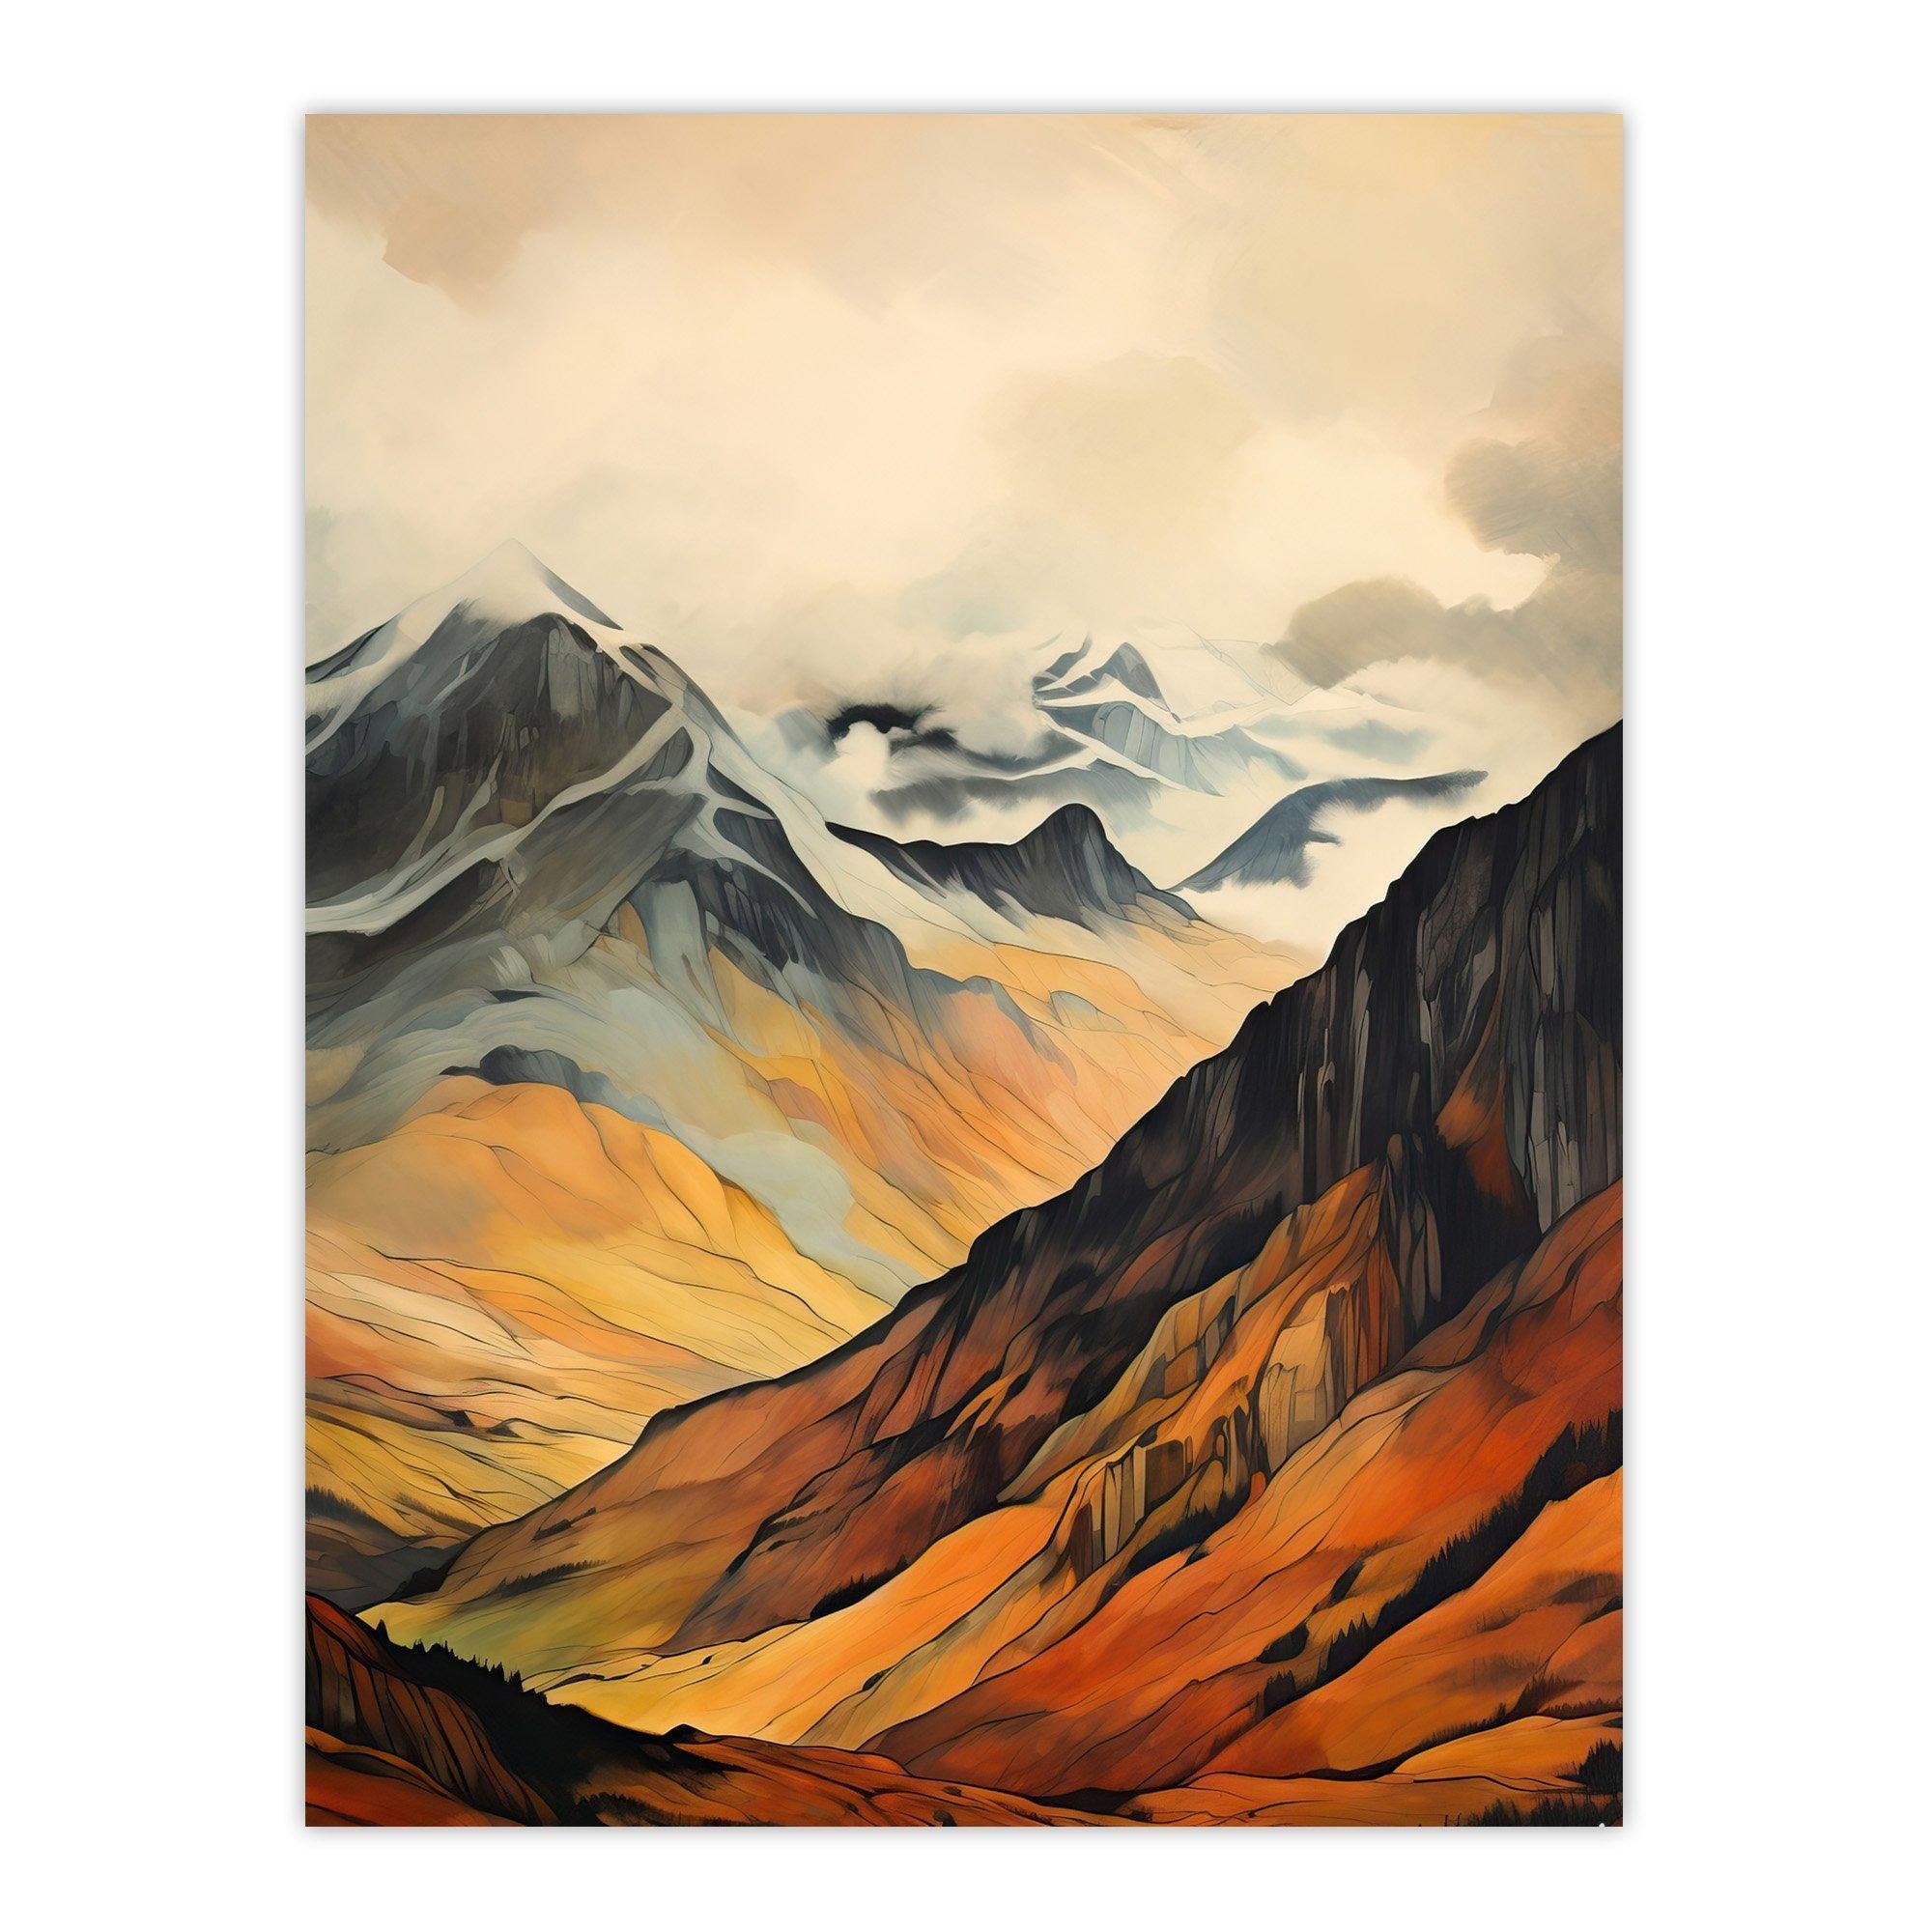 Ben Nevis In Glen Scotland Landscape Watercolour Painting Extra Large XL Unframed Wall Art Poster Print - image 1